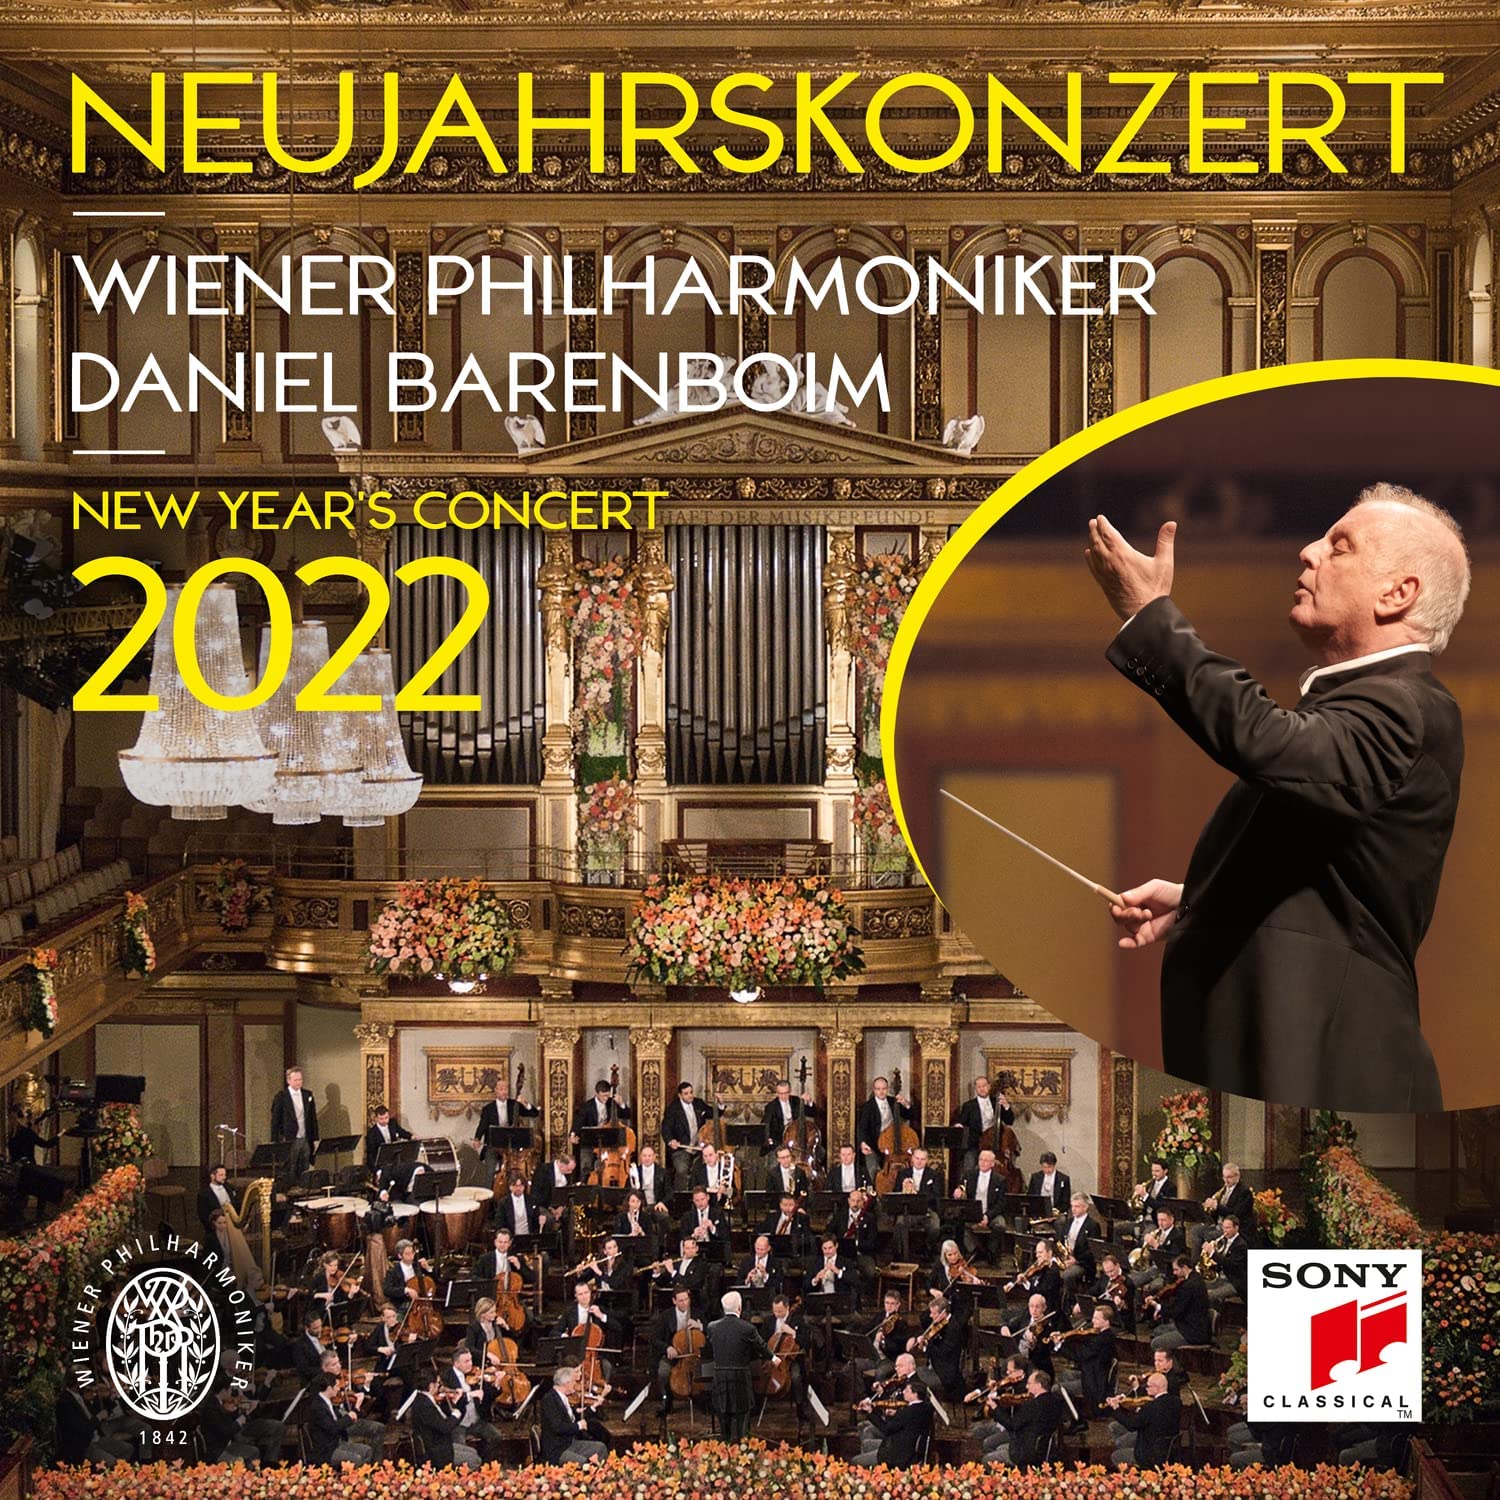 New Year's Concert 2022 / Neujahrskonzert 2022 | Wiener Philharmoniker, Daniel Barenboim image0